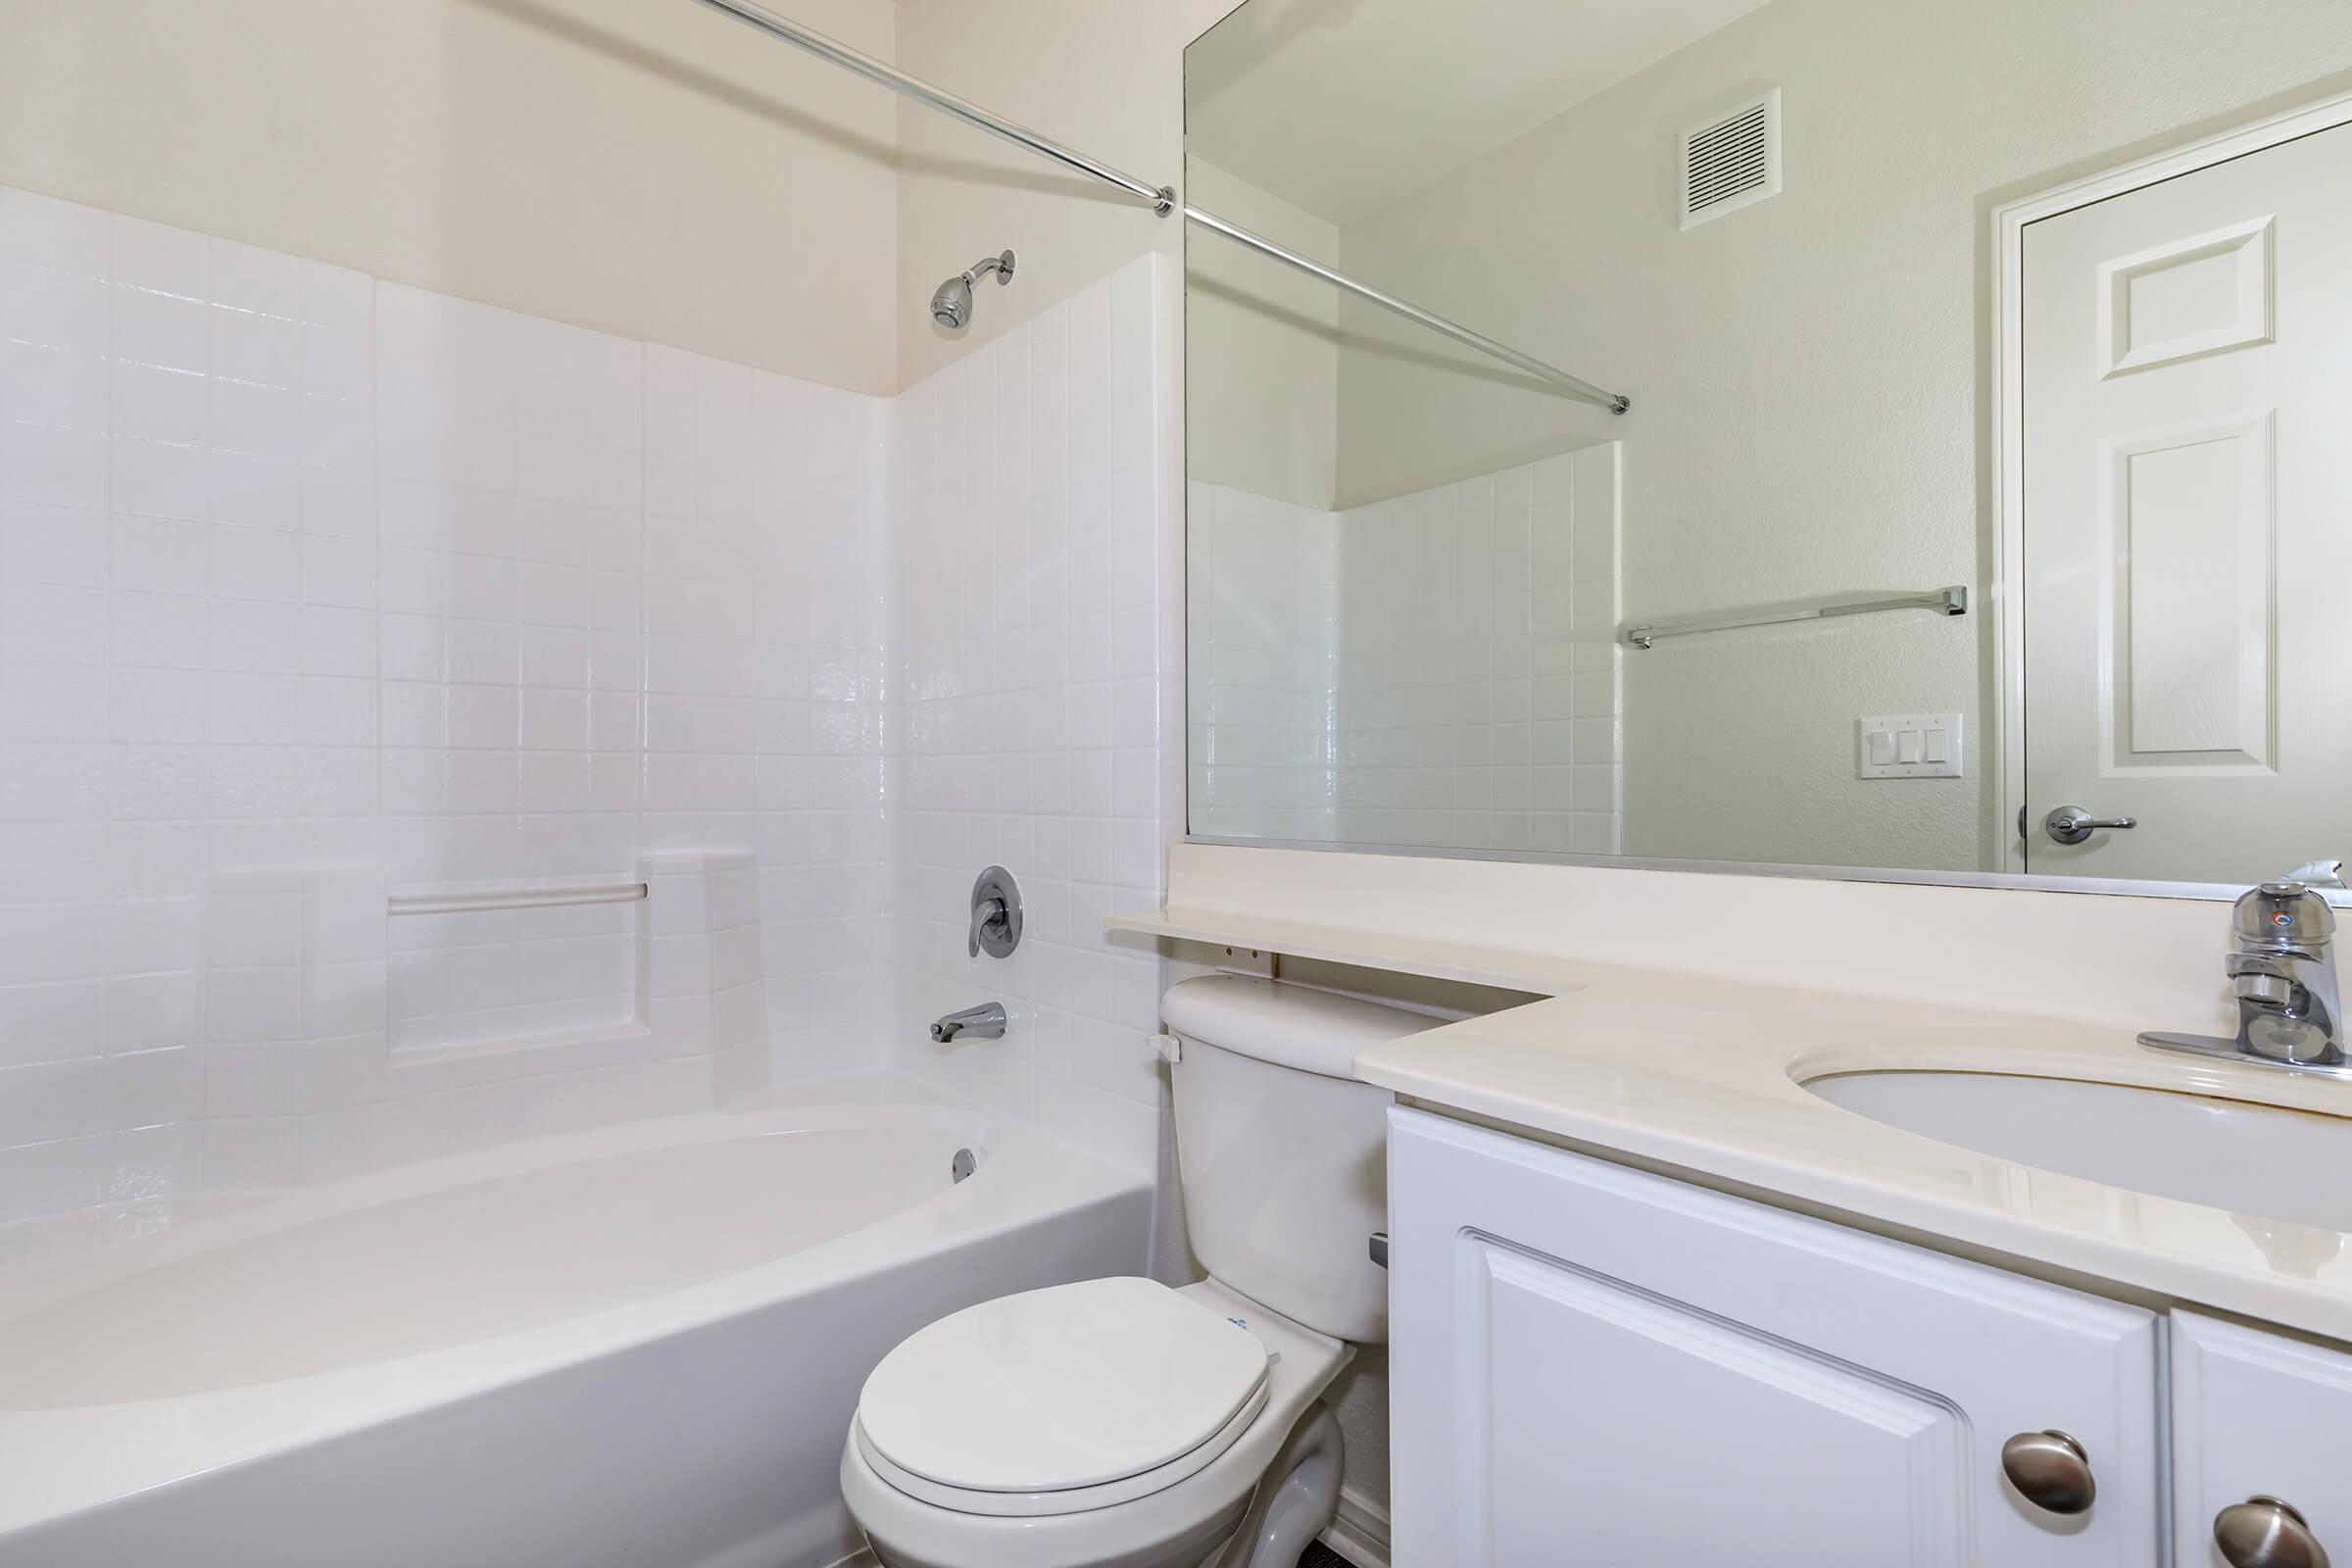 Laurel Glen Apartment Homes has spacious bathrooms